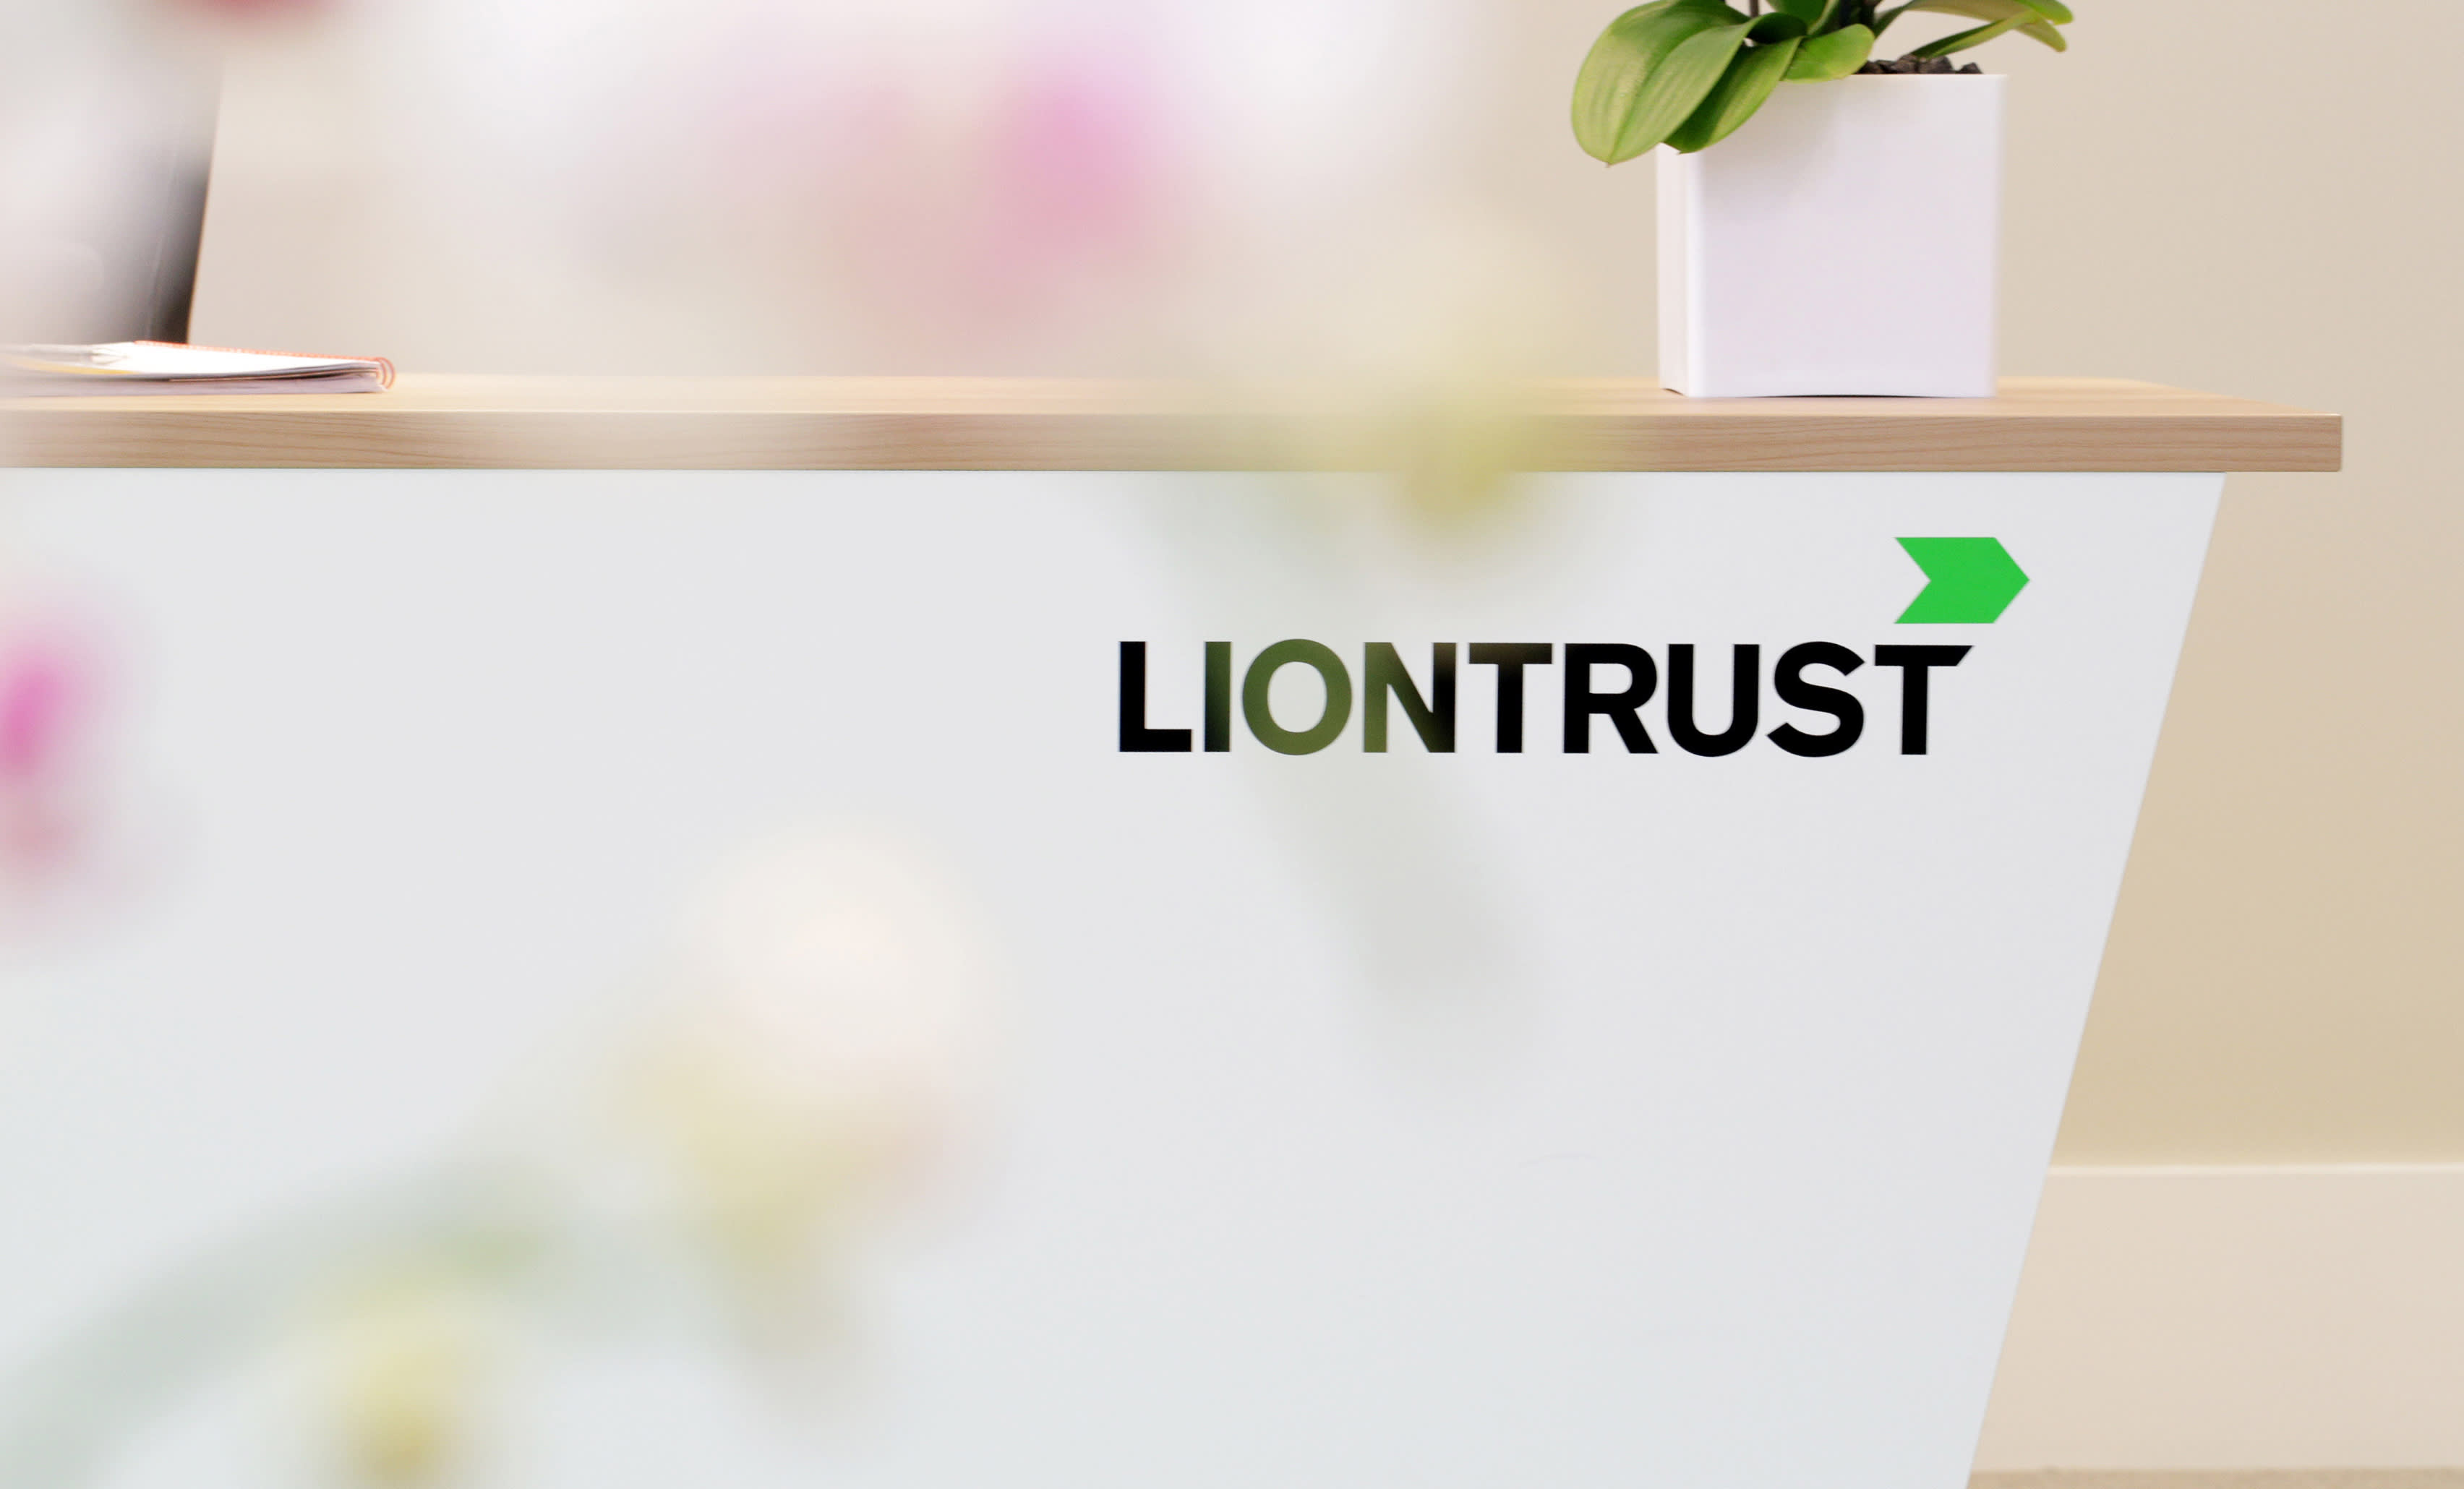 Liontrust joins FTSE 250 in latest reshuffle